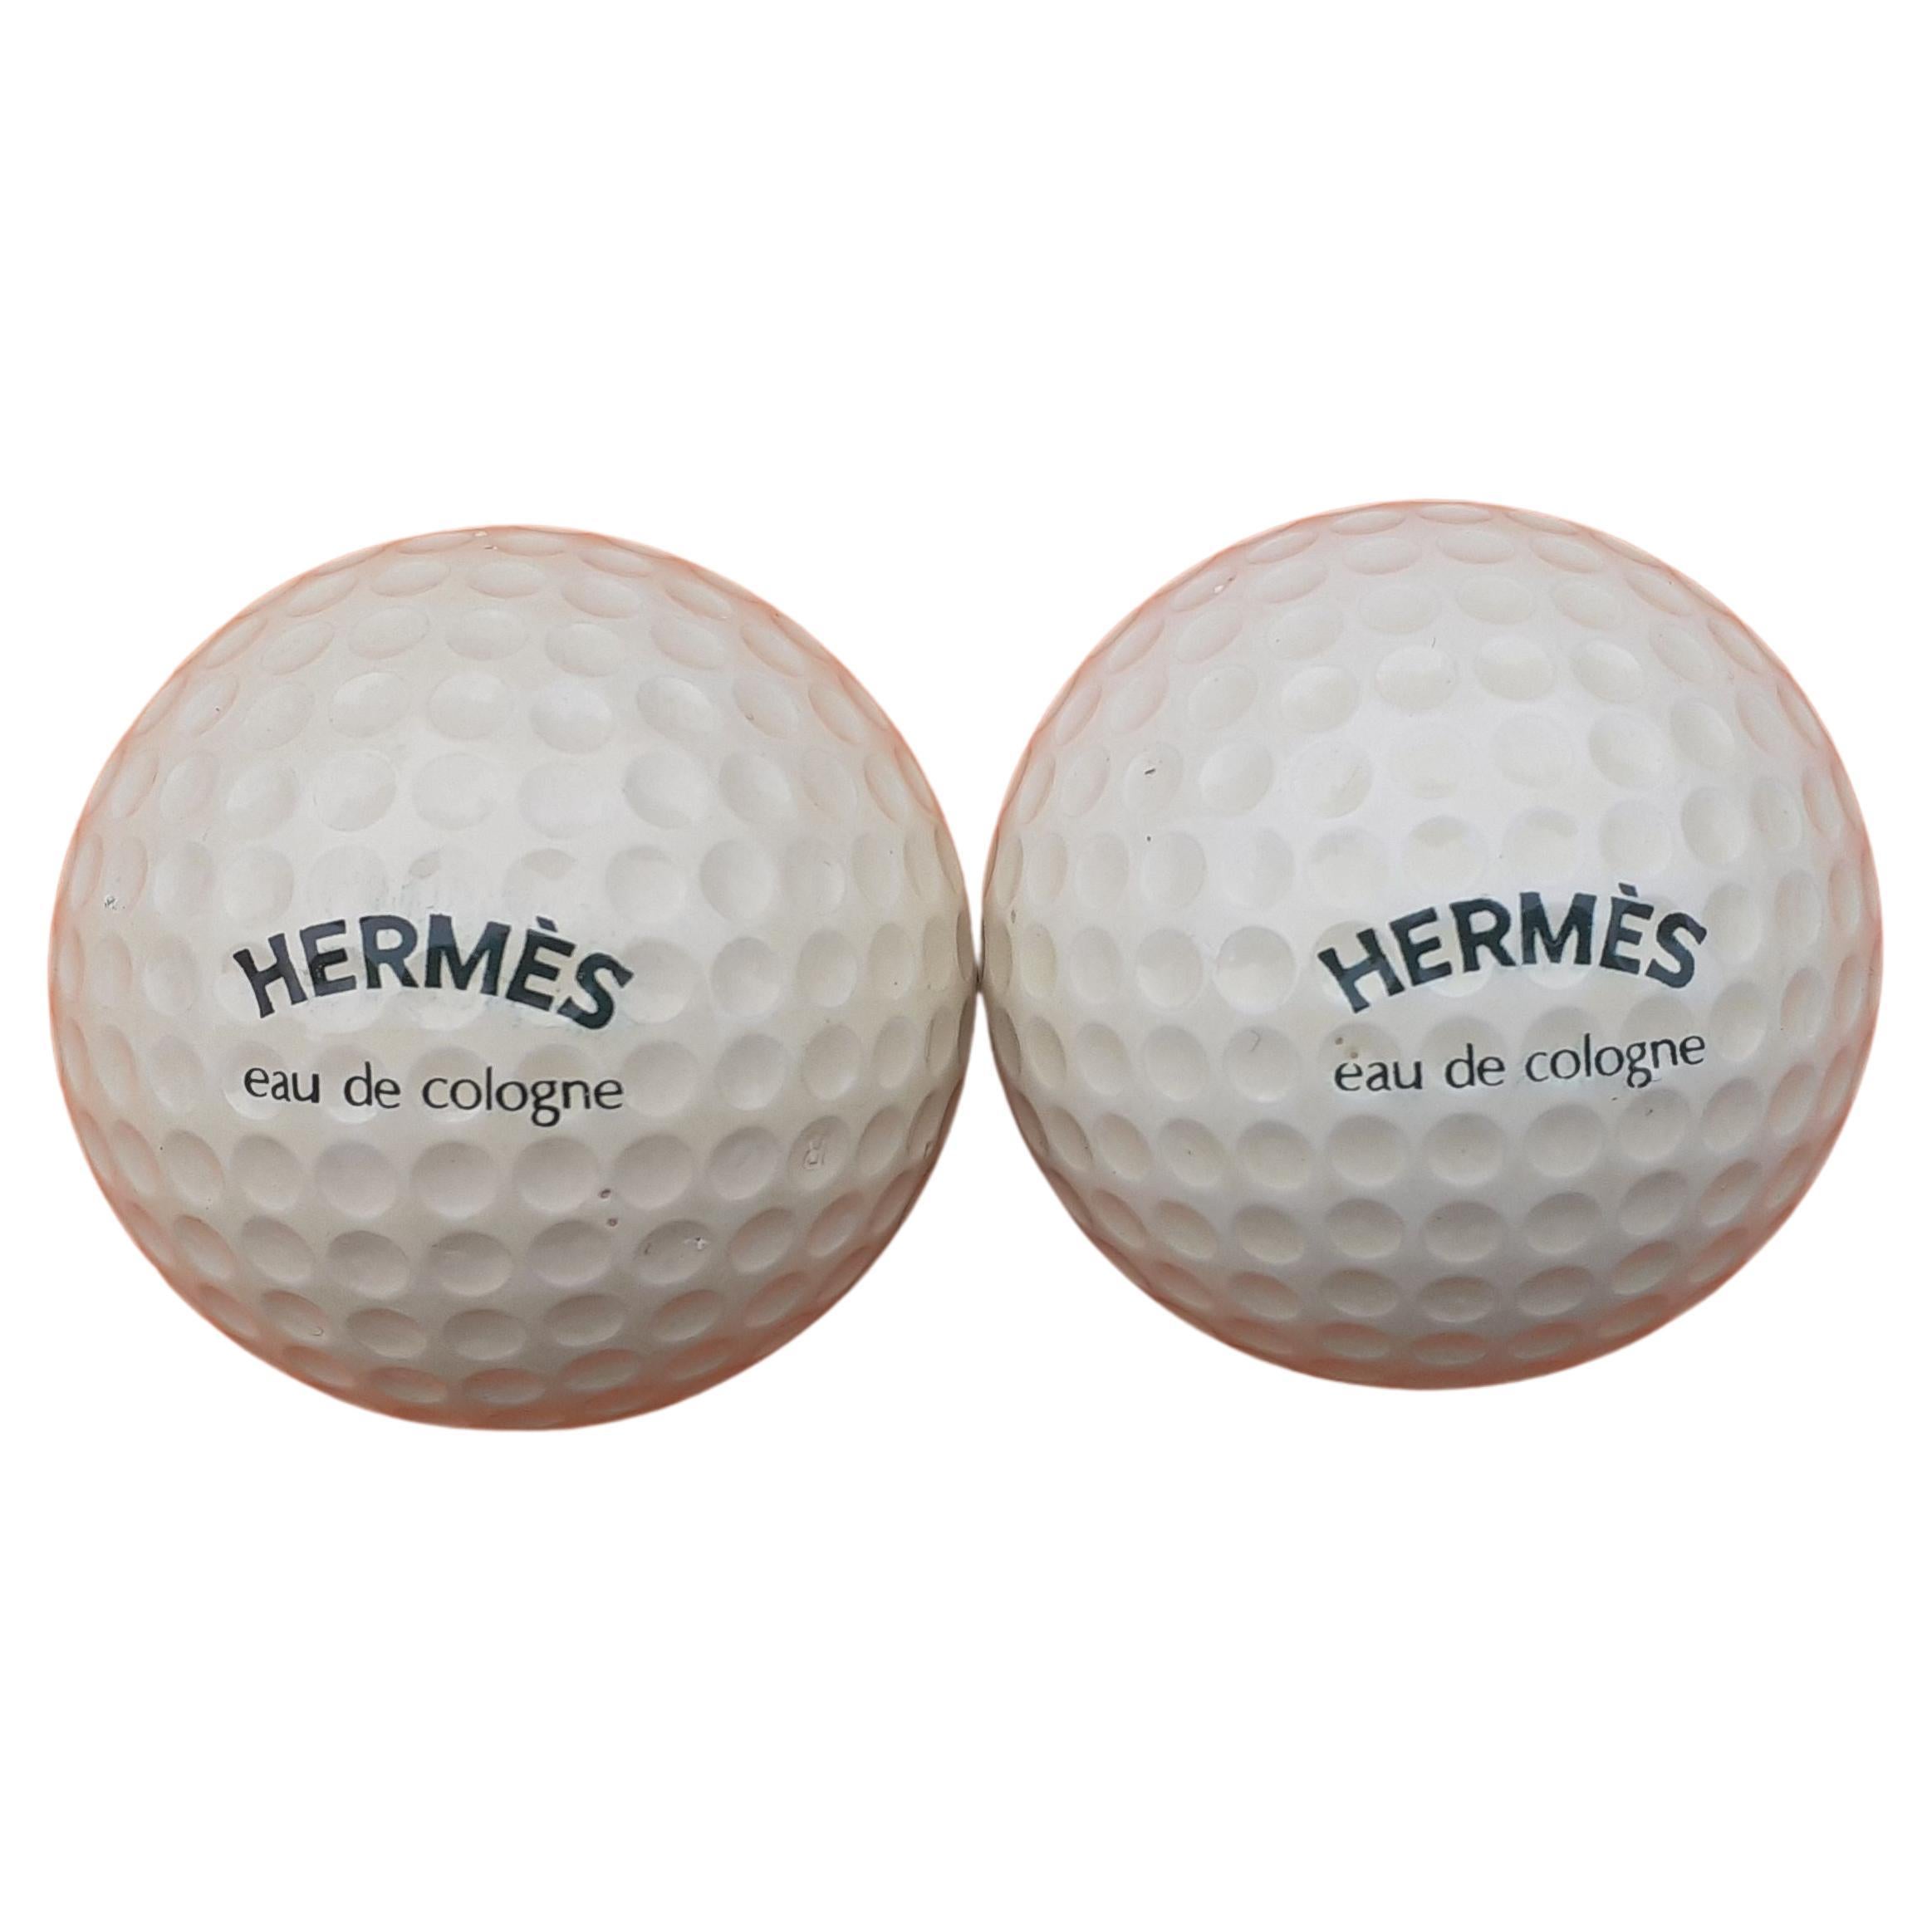 Rare Hermès Set of 2 Golf Balls